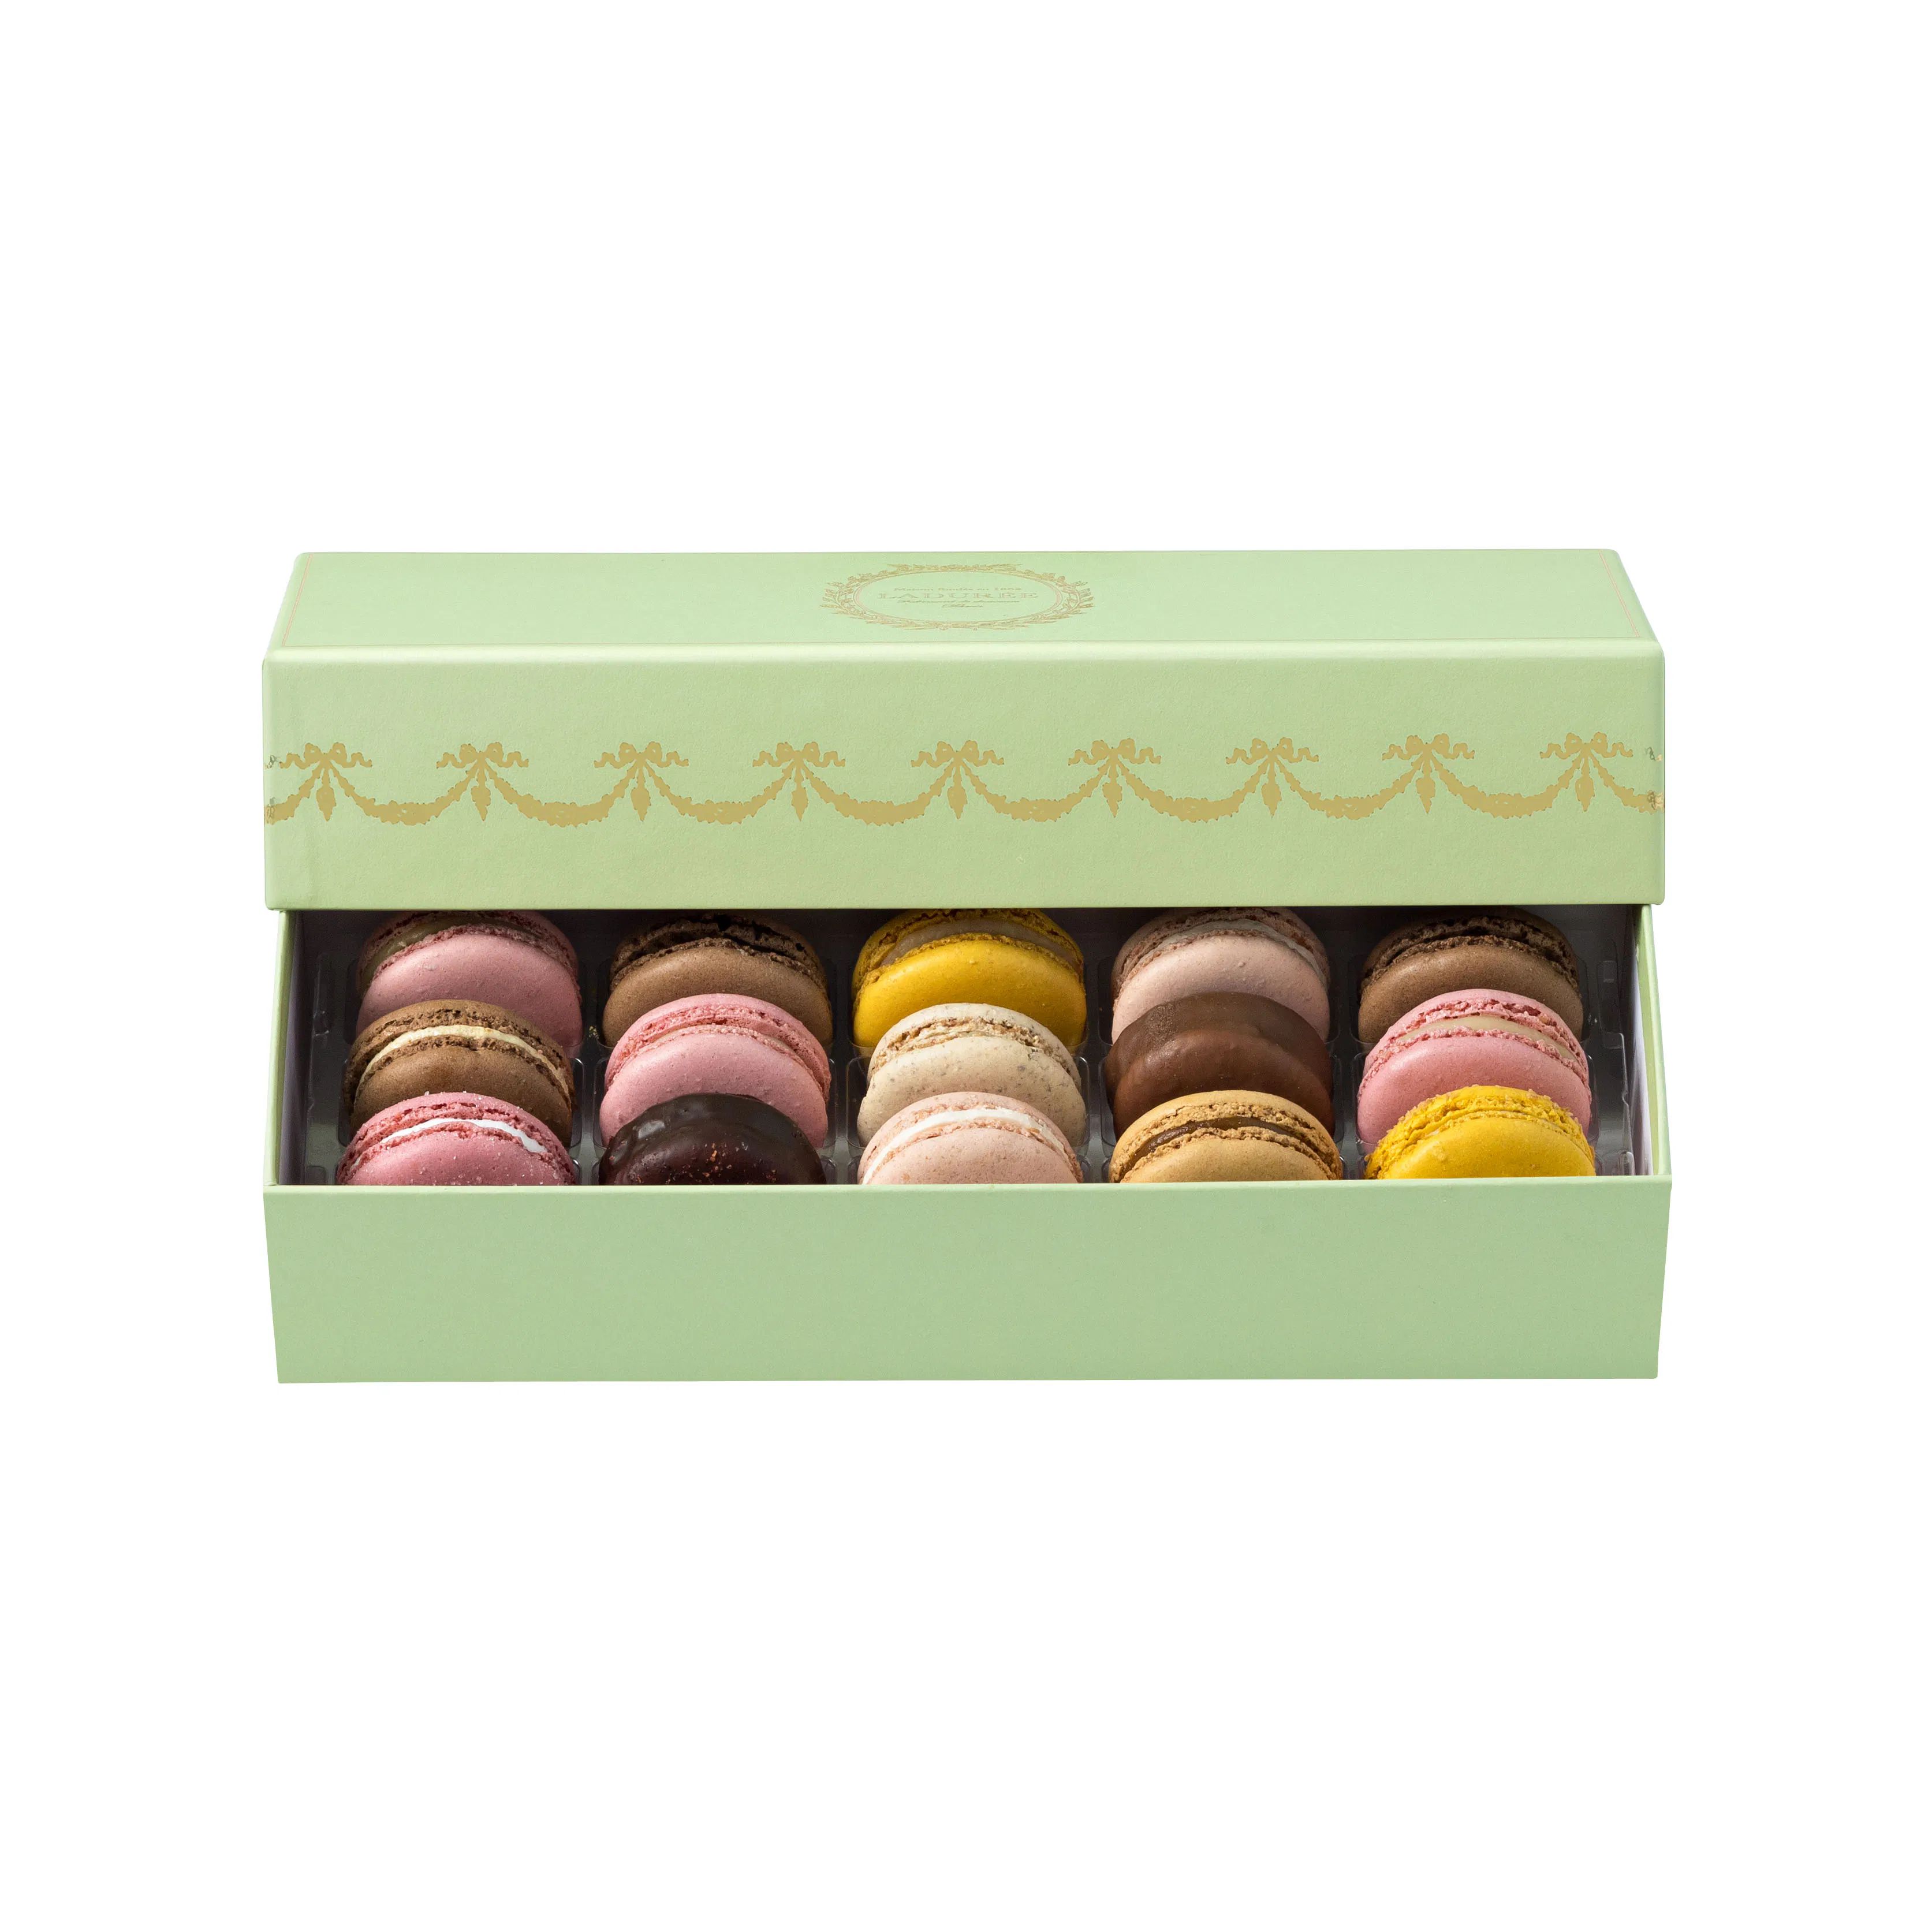 Prestige Green - Box of 15 Macarons by Ladurée Paris | Goldbelly | Goldbelly